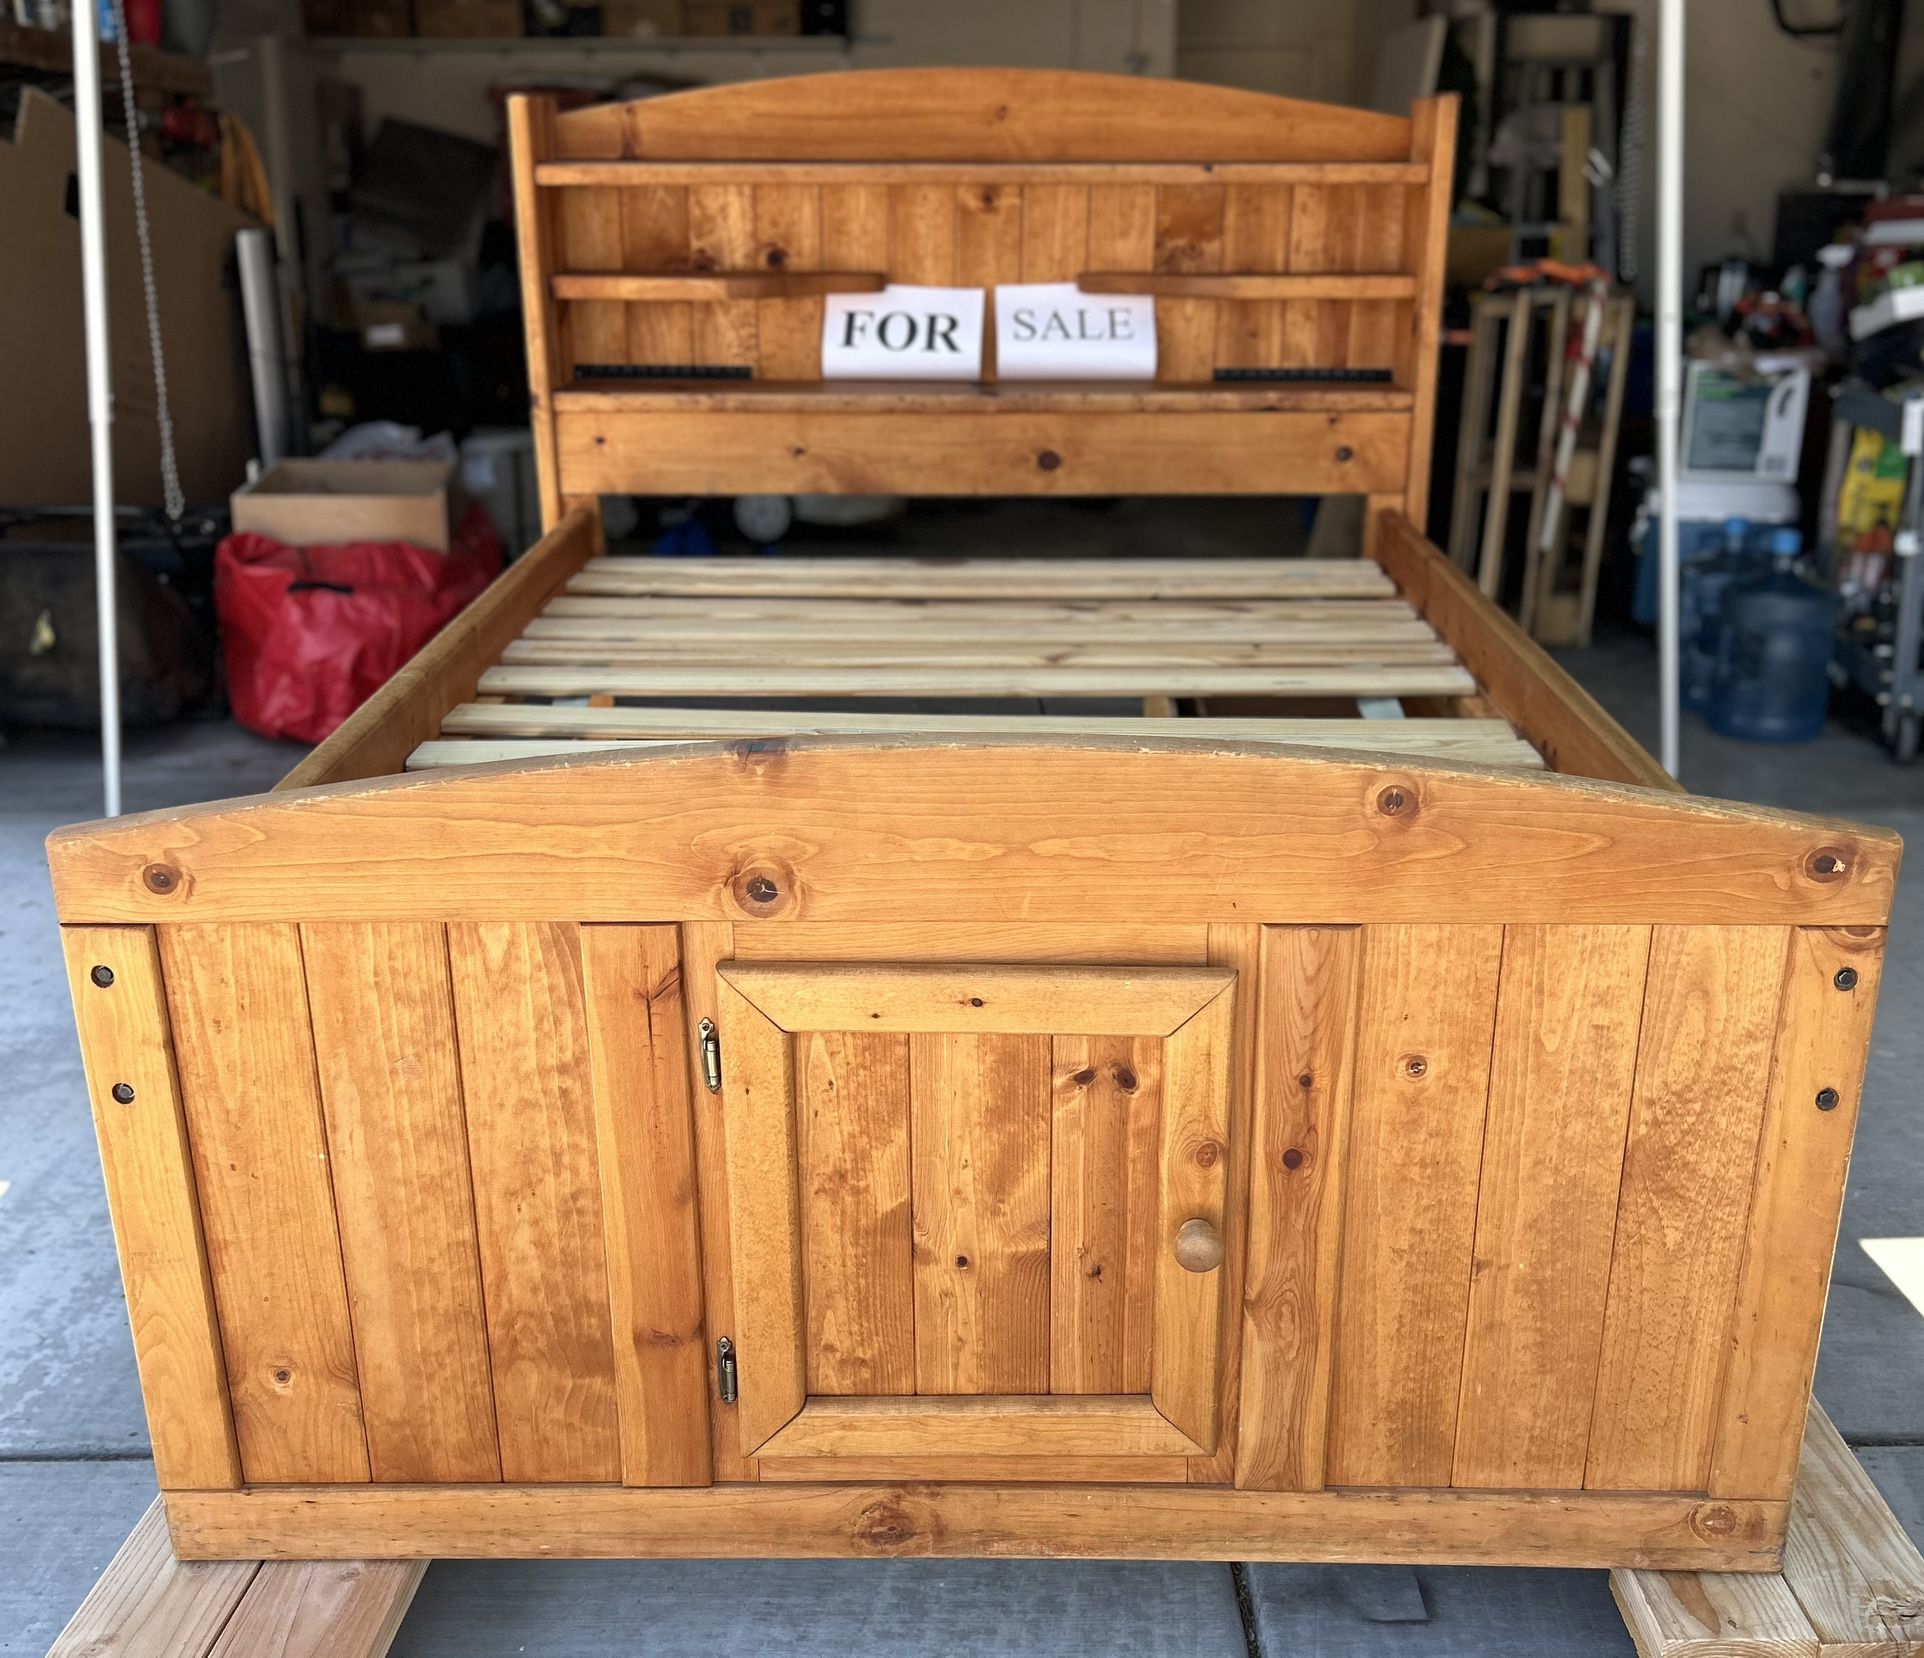 Full Size Wood Bed Frame